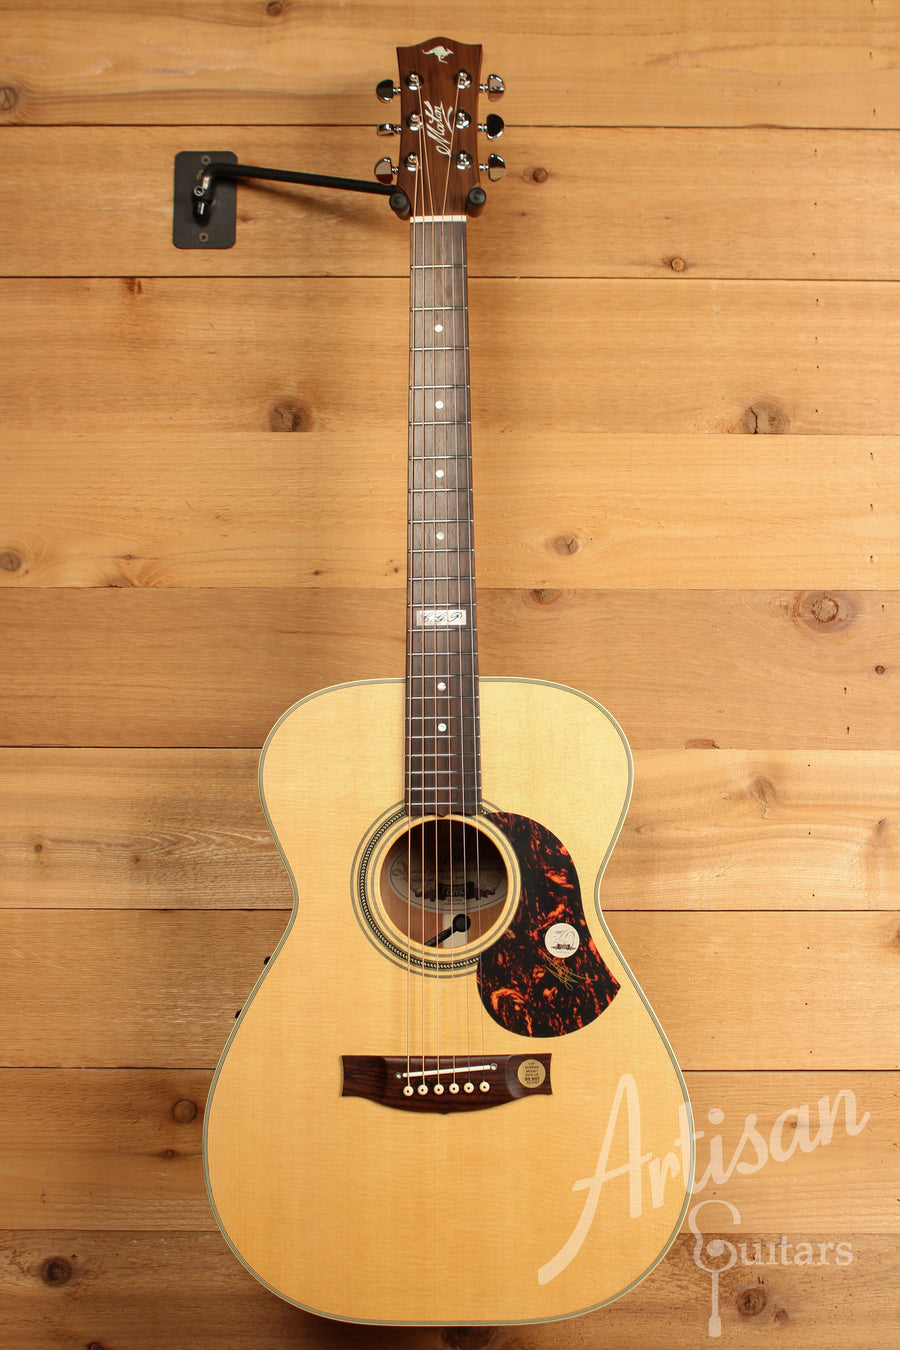 Maton EBG 808 TE Tommy Emmanuel Signature Guitar ID-11328 - Artisan Guitars